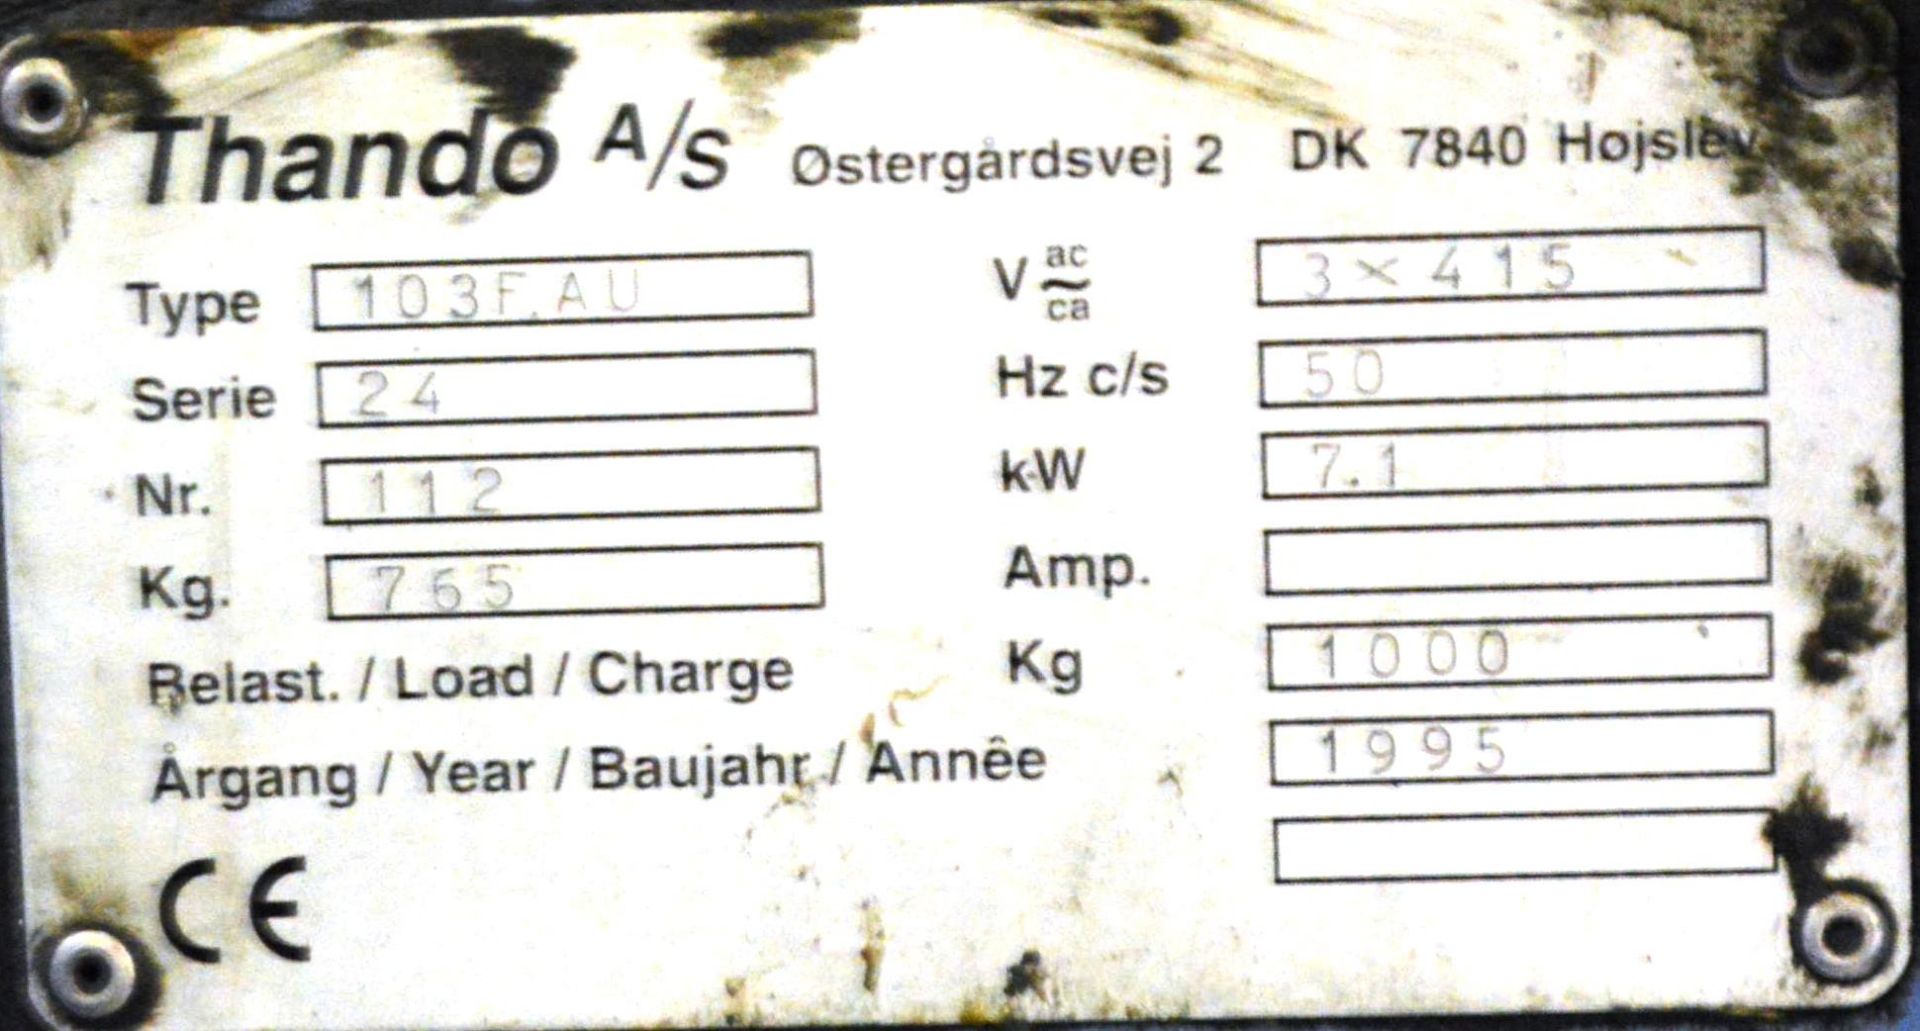 Thando 103F.AU B1 PILE TURNER, serial no. 24, nr112, 765kg, 3 x 415v, year of manufacture 1995 - Image 5 of 5